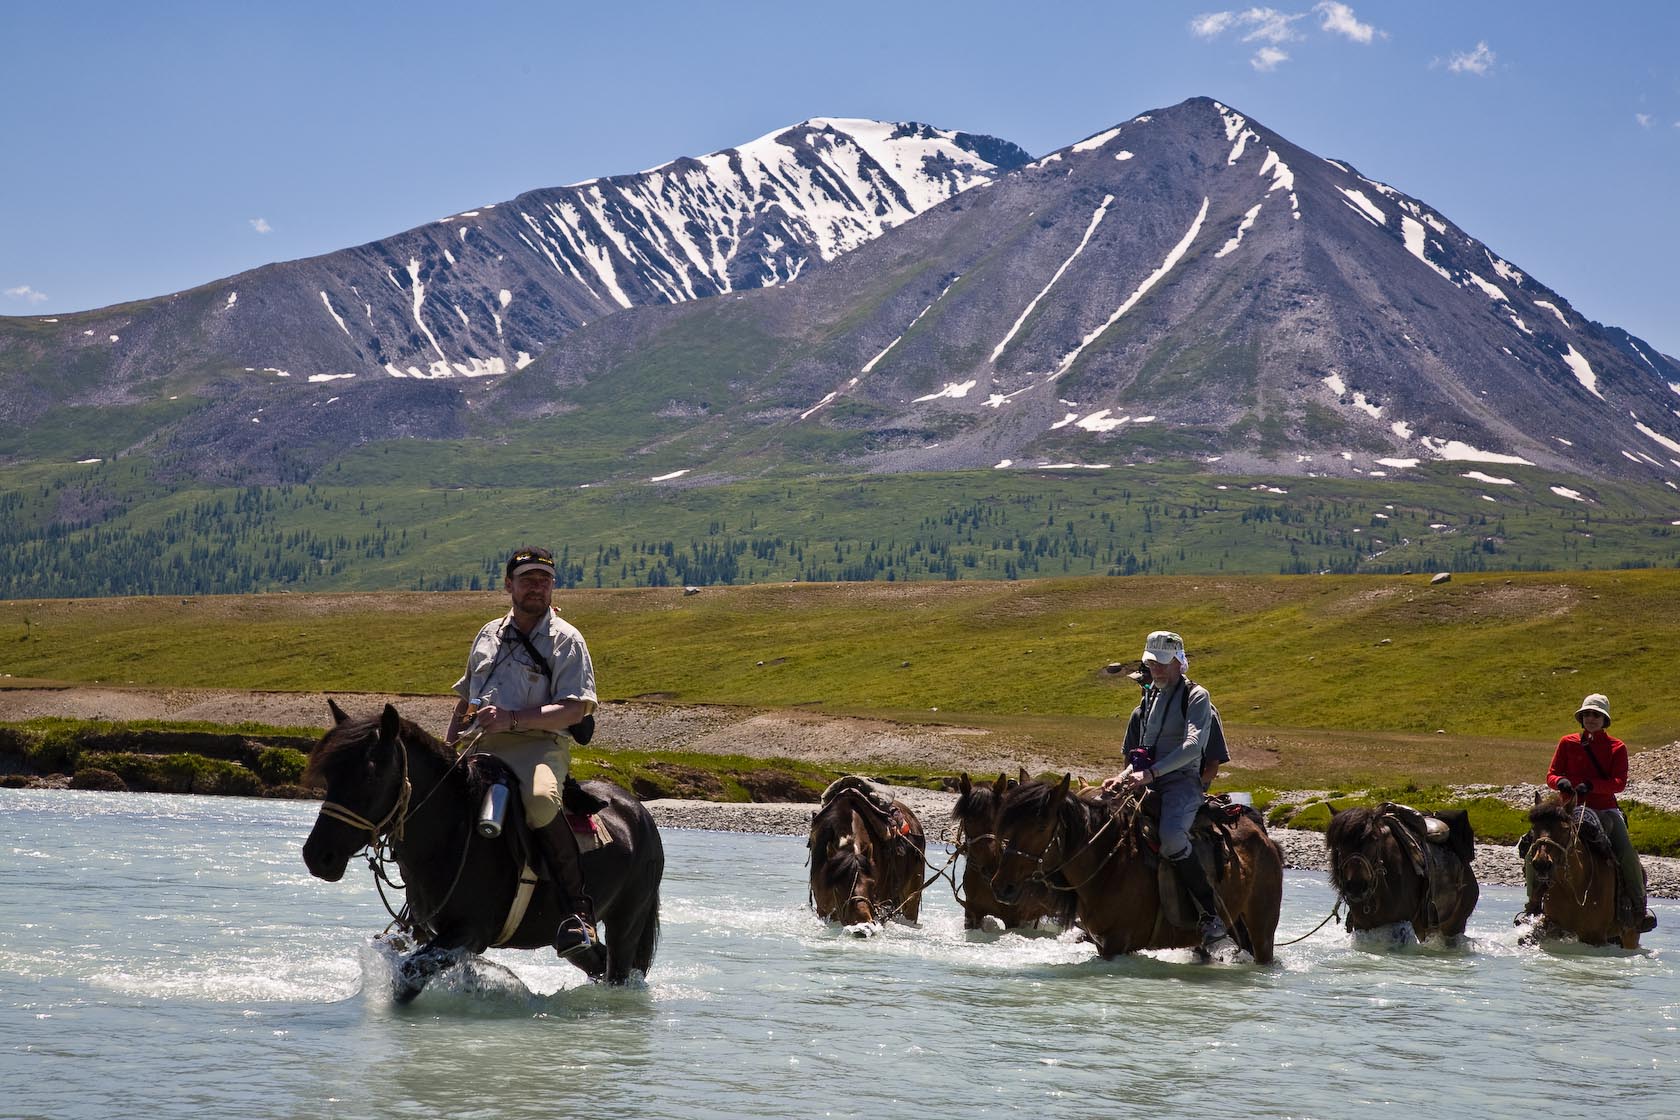 WESTERN MONGOLIA HORSEBACK RIDING TOUR